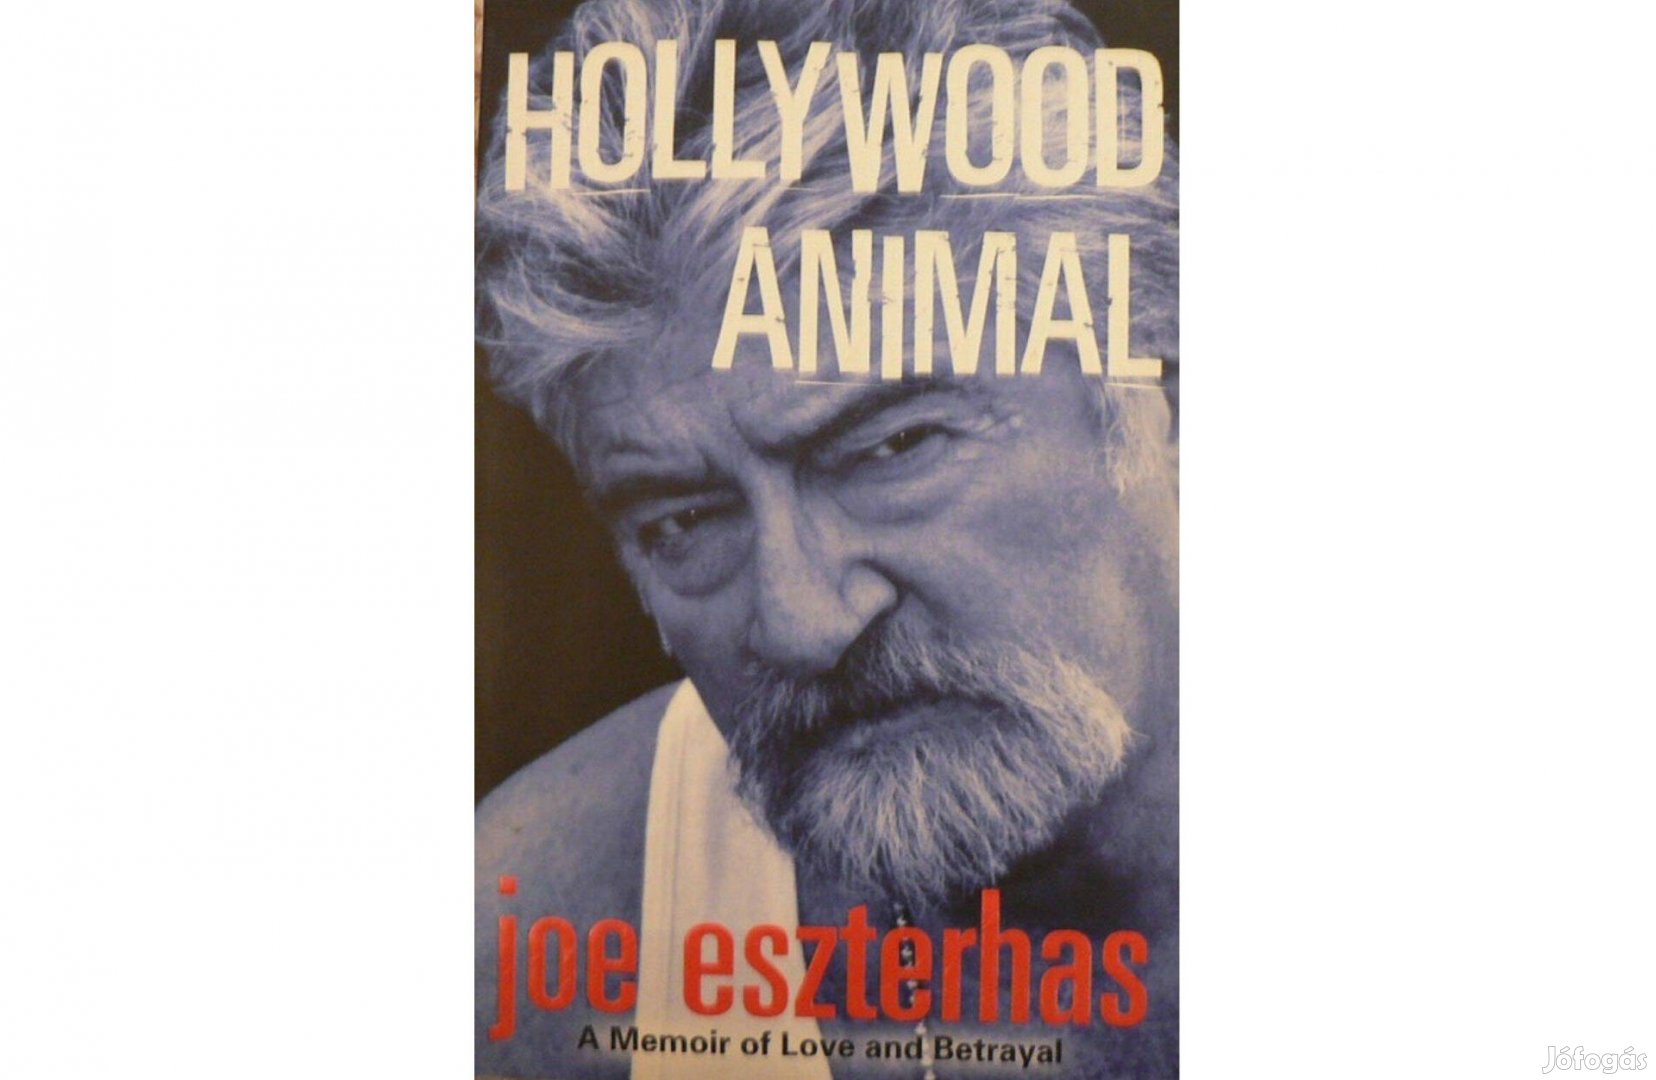 Joe Eszterhas: Hollywood Animal - A Memoir of Love and Betrayal